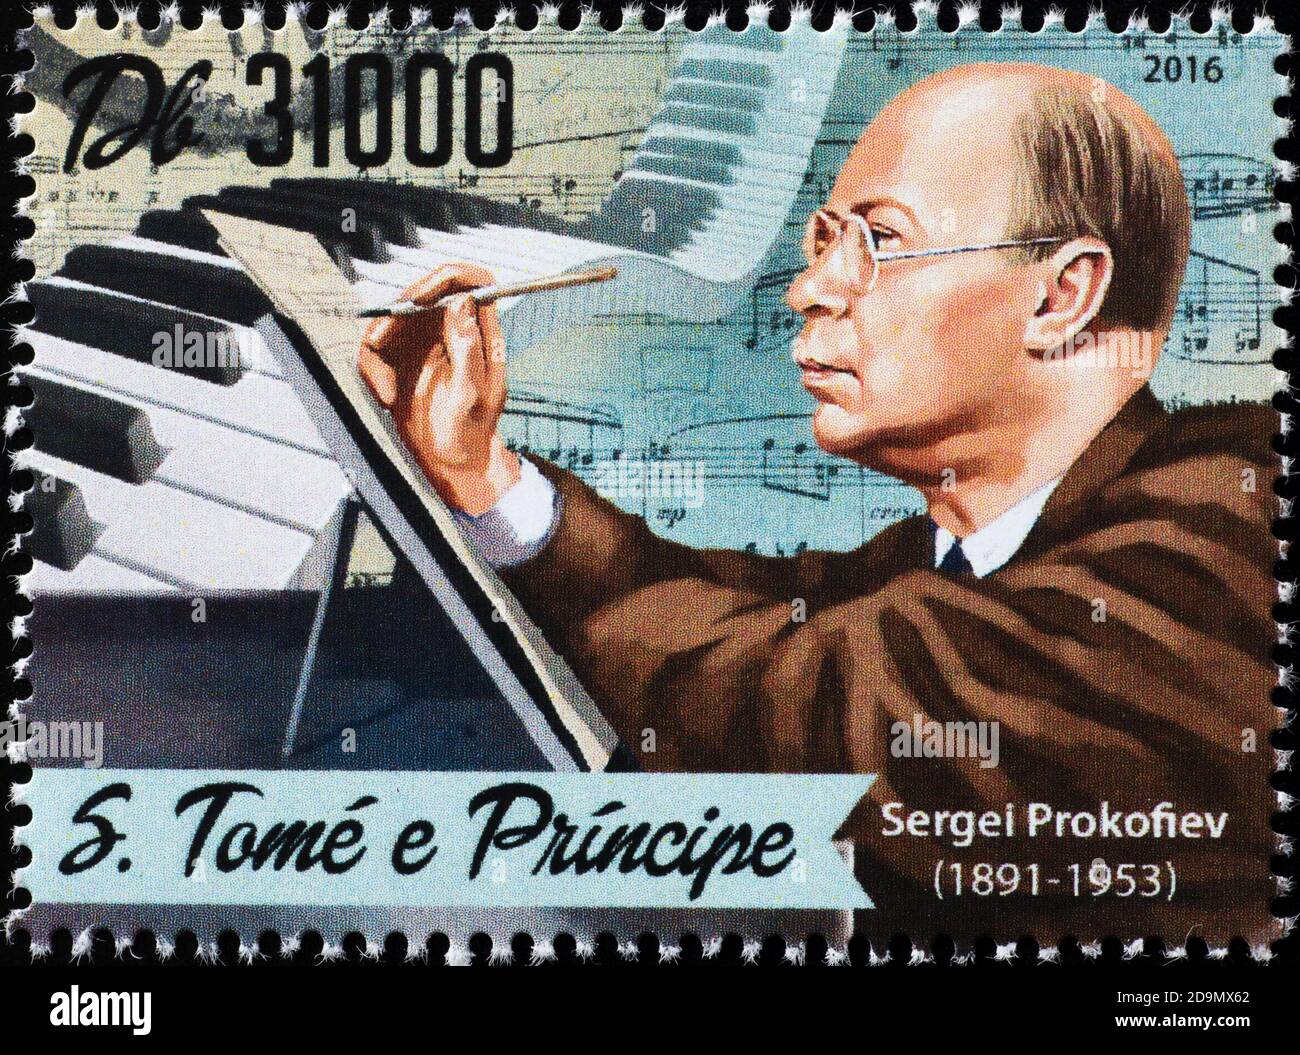 Sergei Prokofiev at work on postage stamp Stock Photo